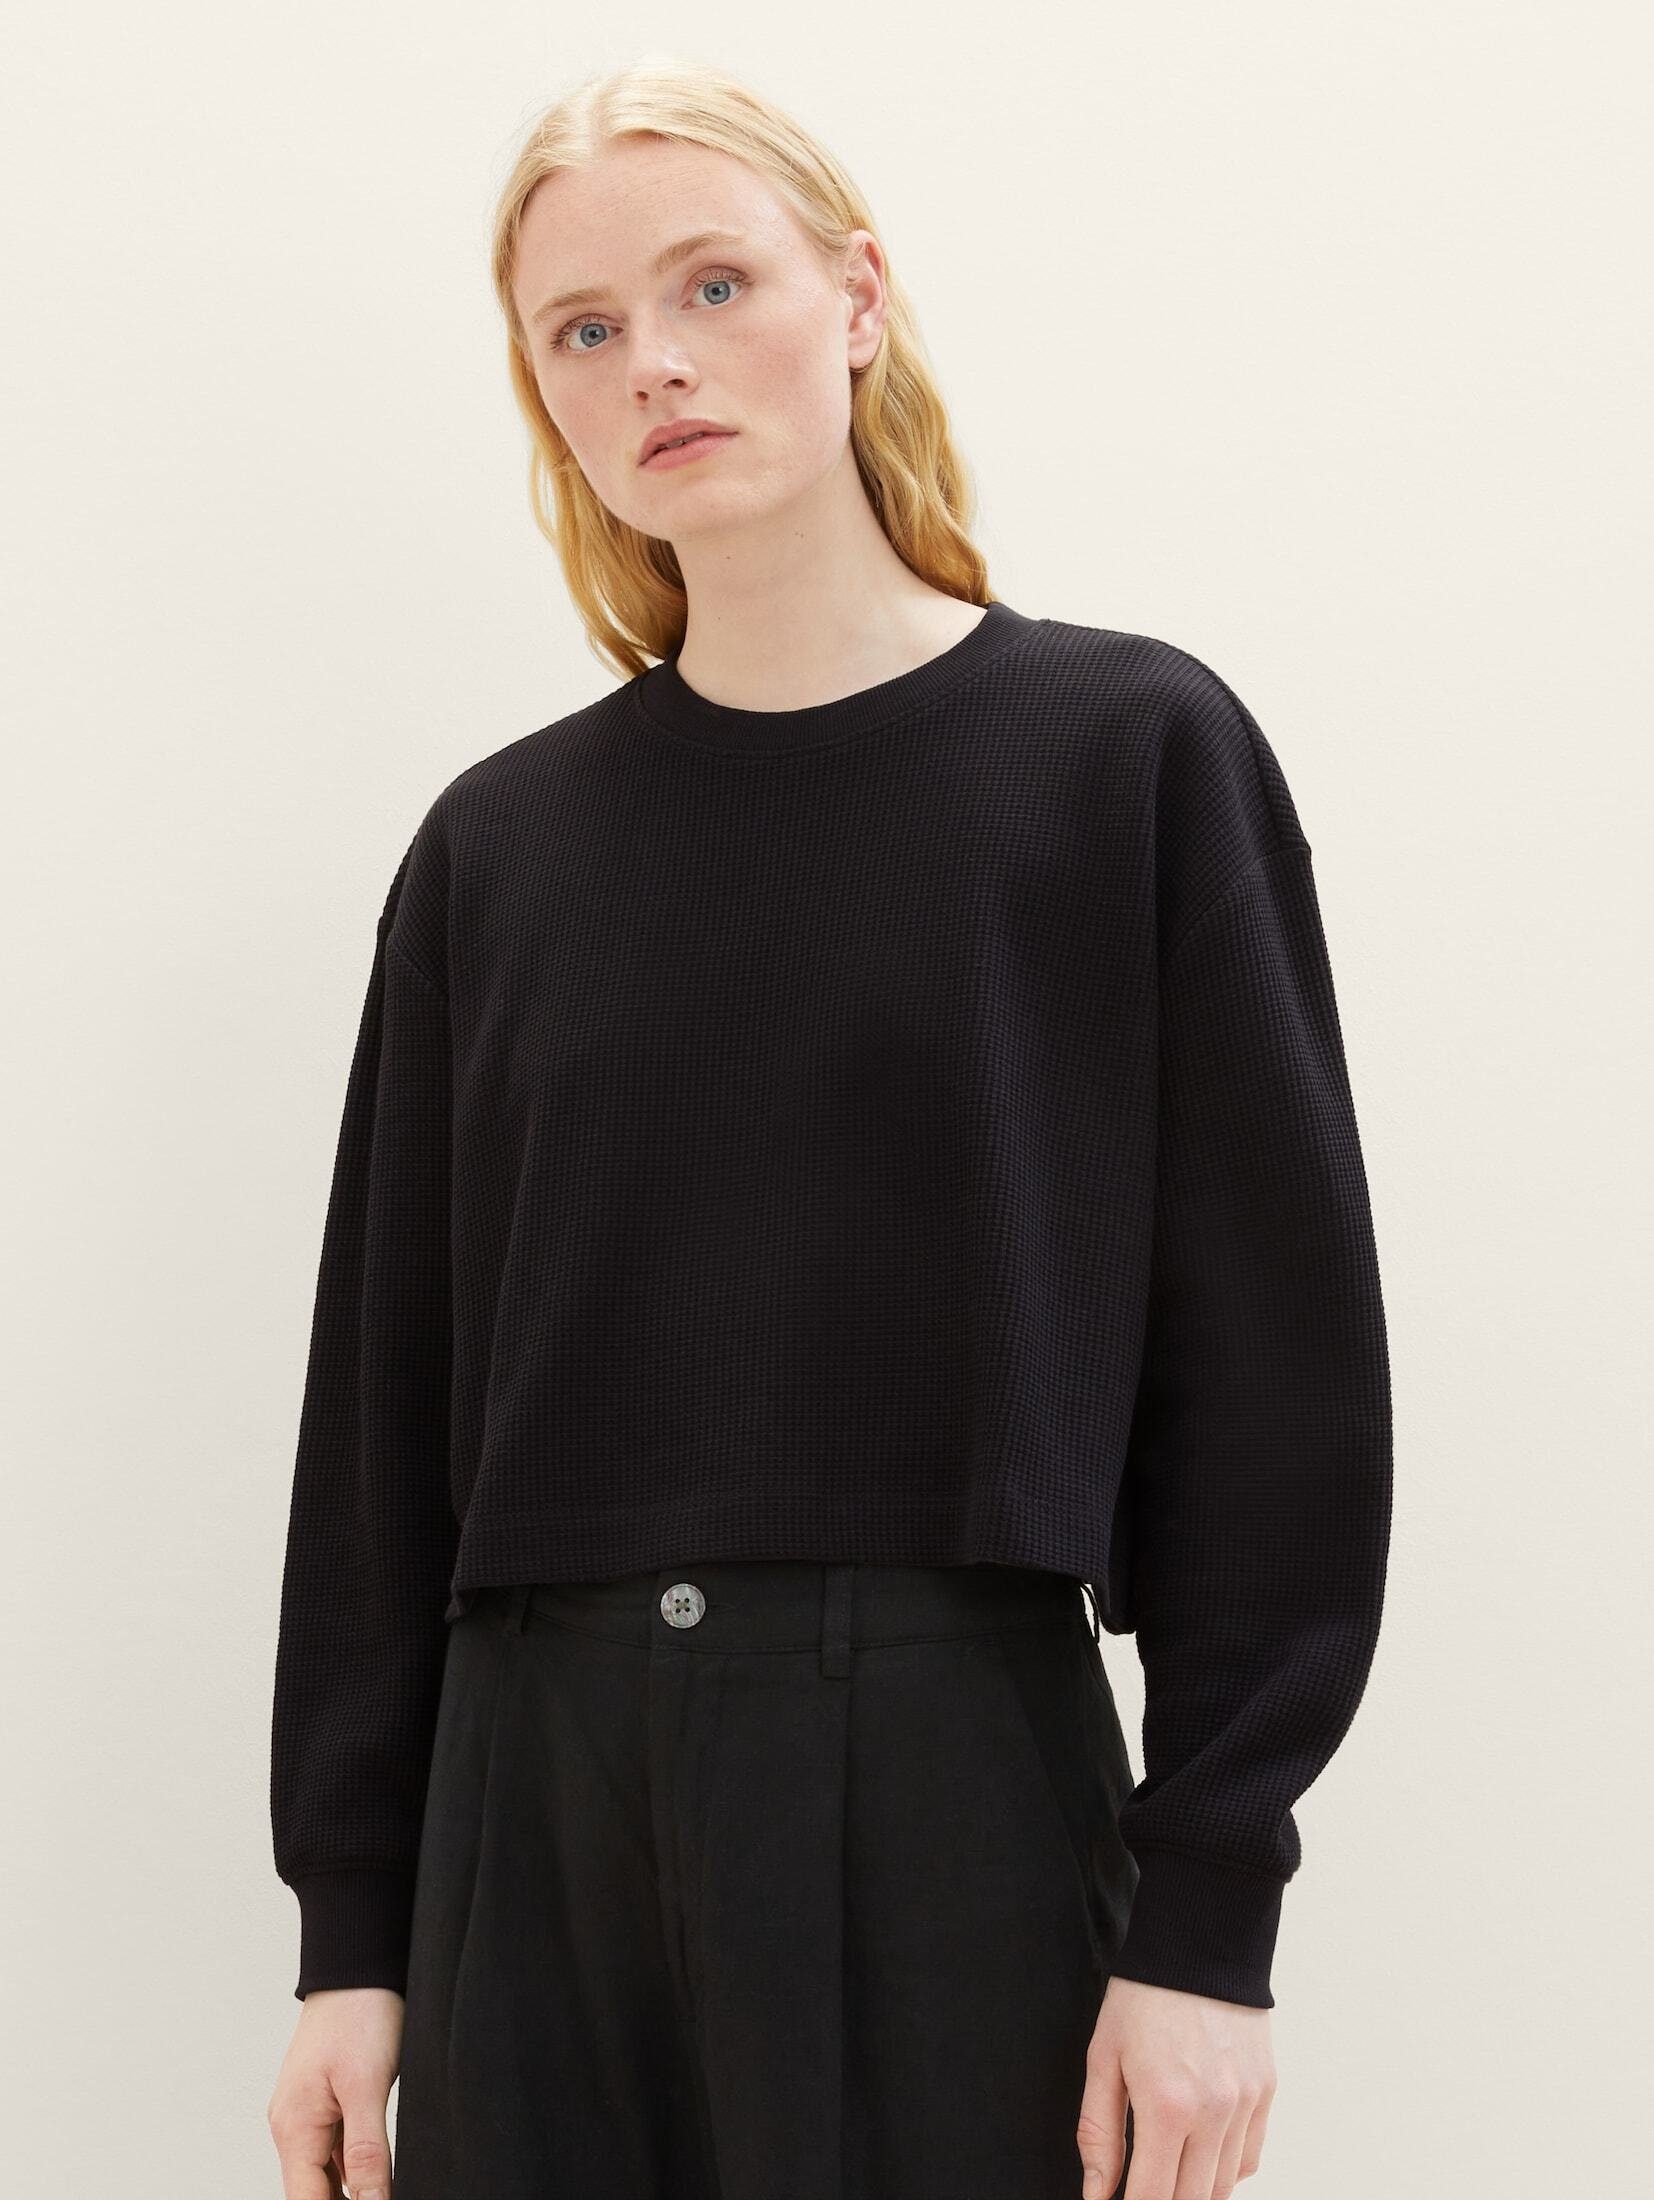 Sweatshirt TAILOR black Denim deep Cropped TOM Sweatshirt